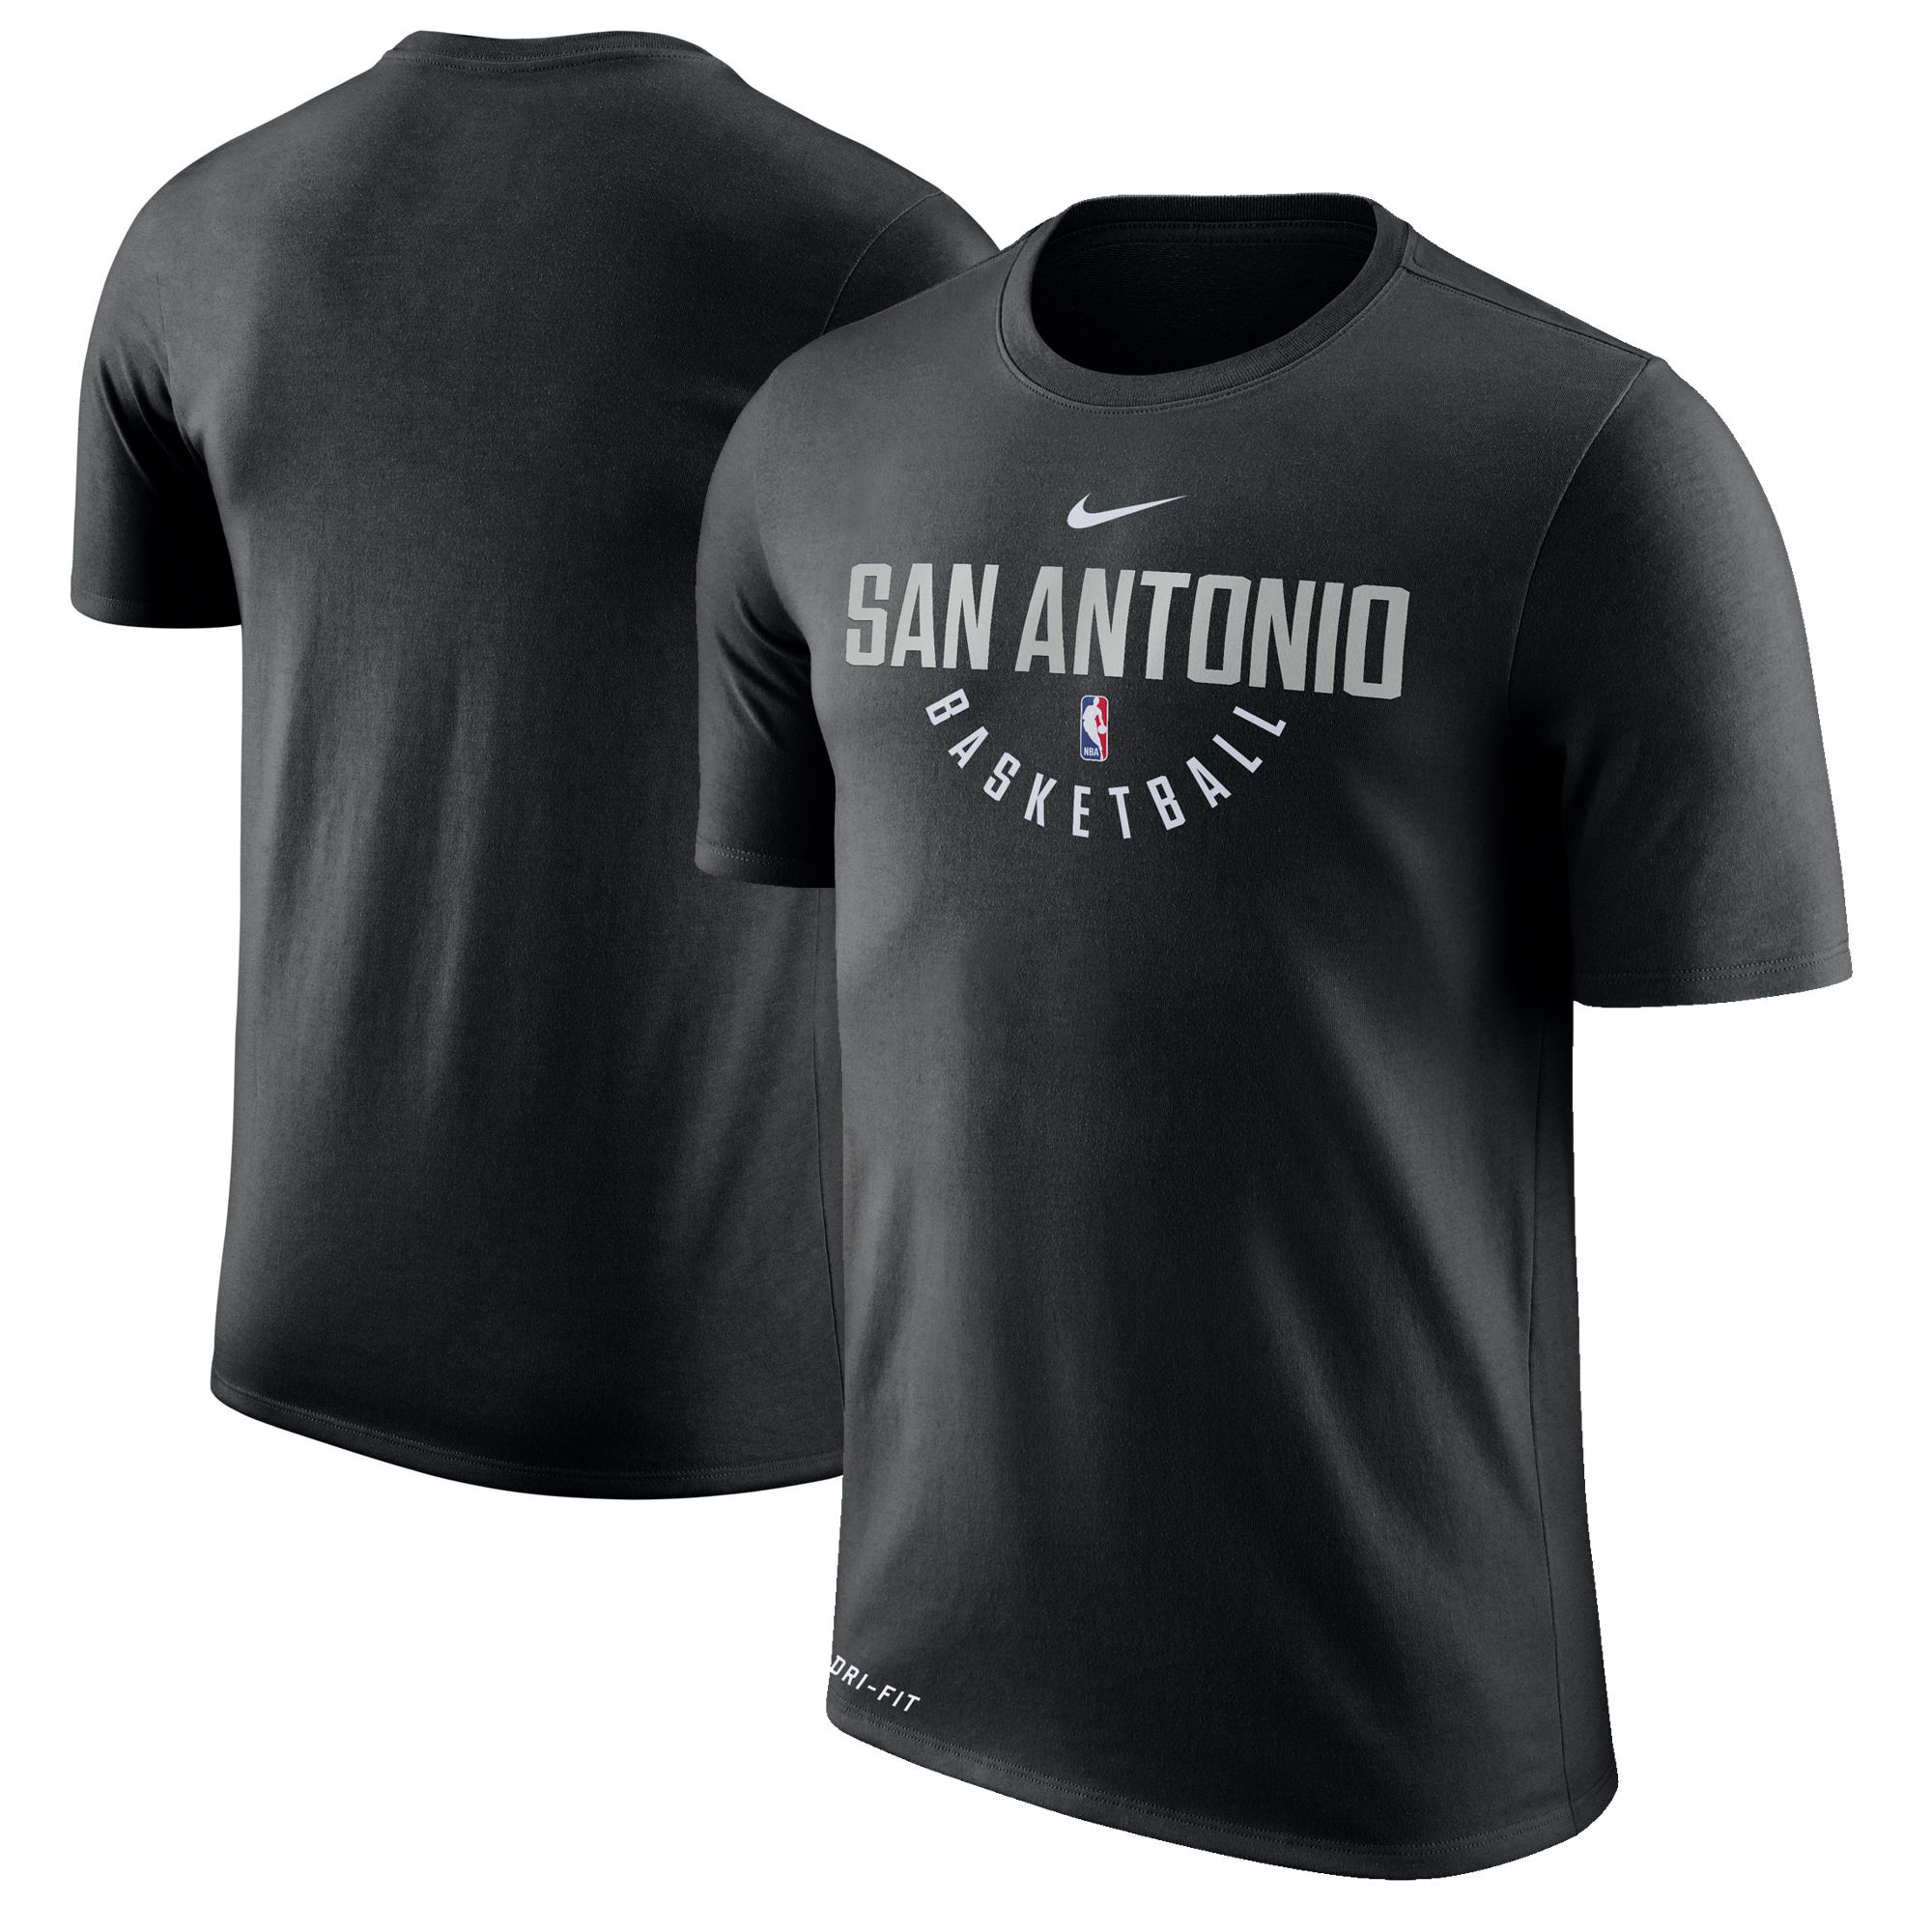 San Antonio Spurs Black Nike Practice Performance T-Shirt